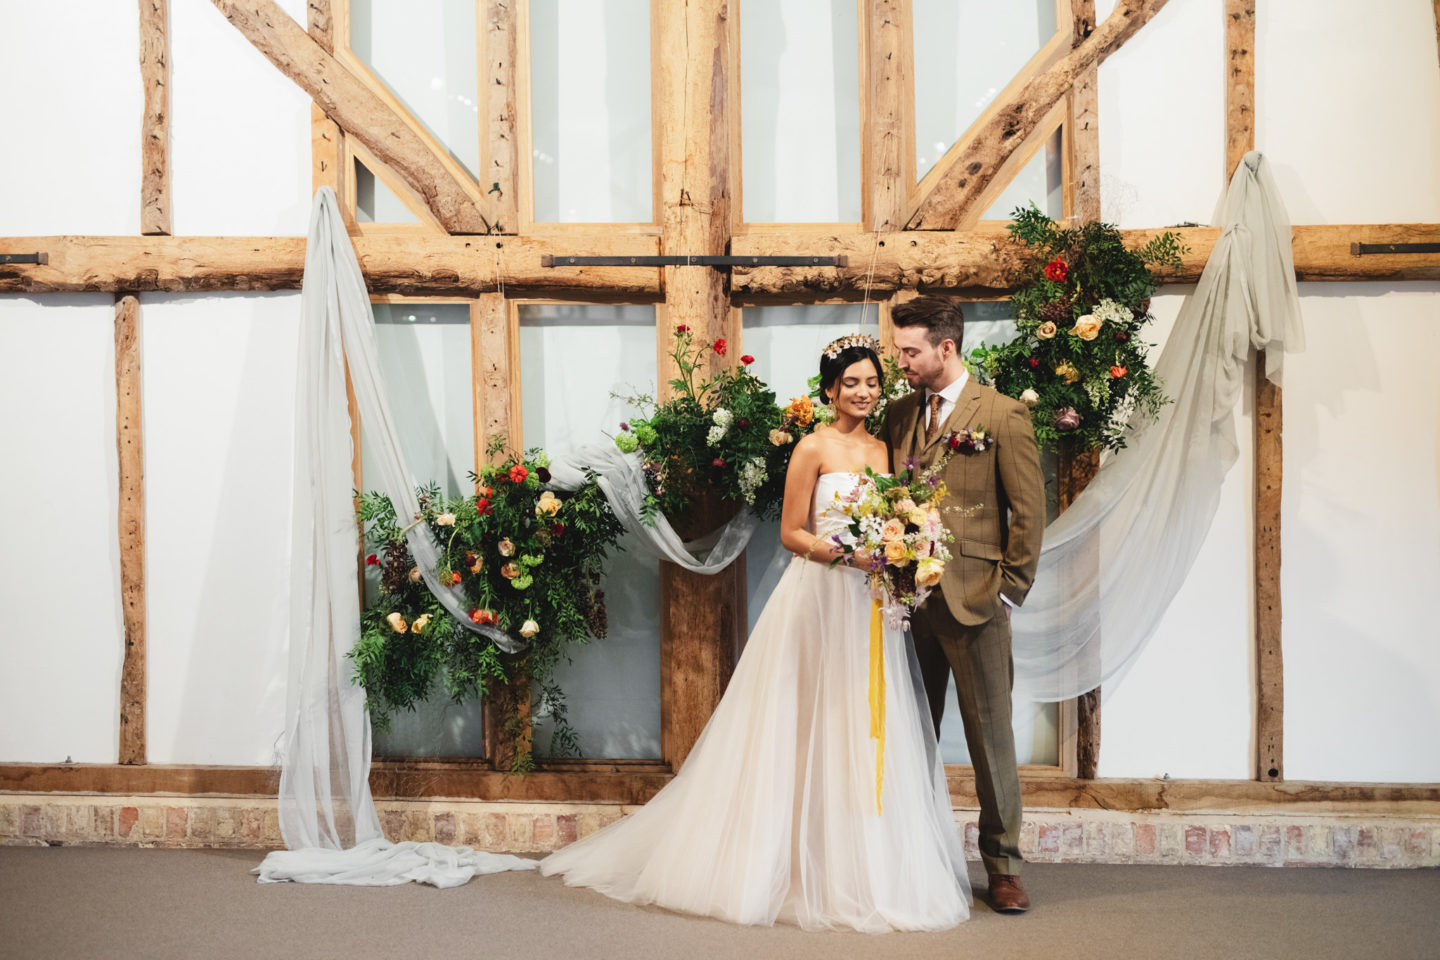 Rustic Barn Wedding Inspiration at South Farm Hertfordshire